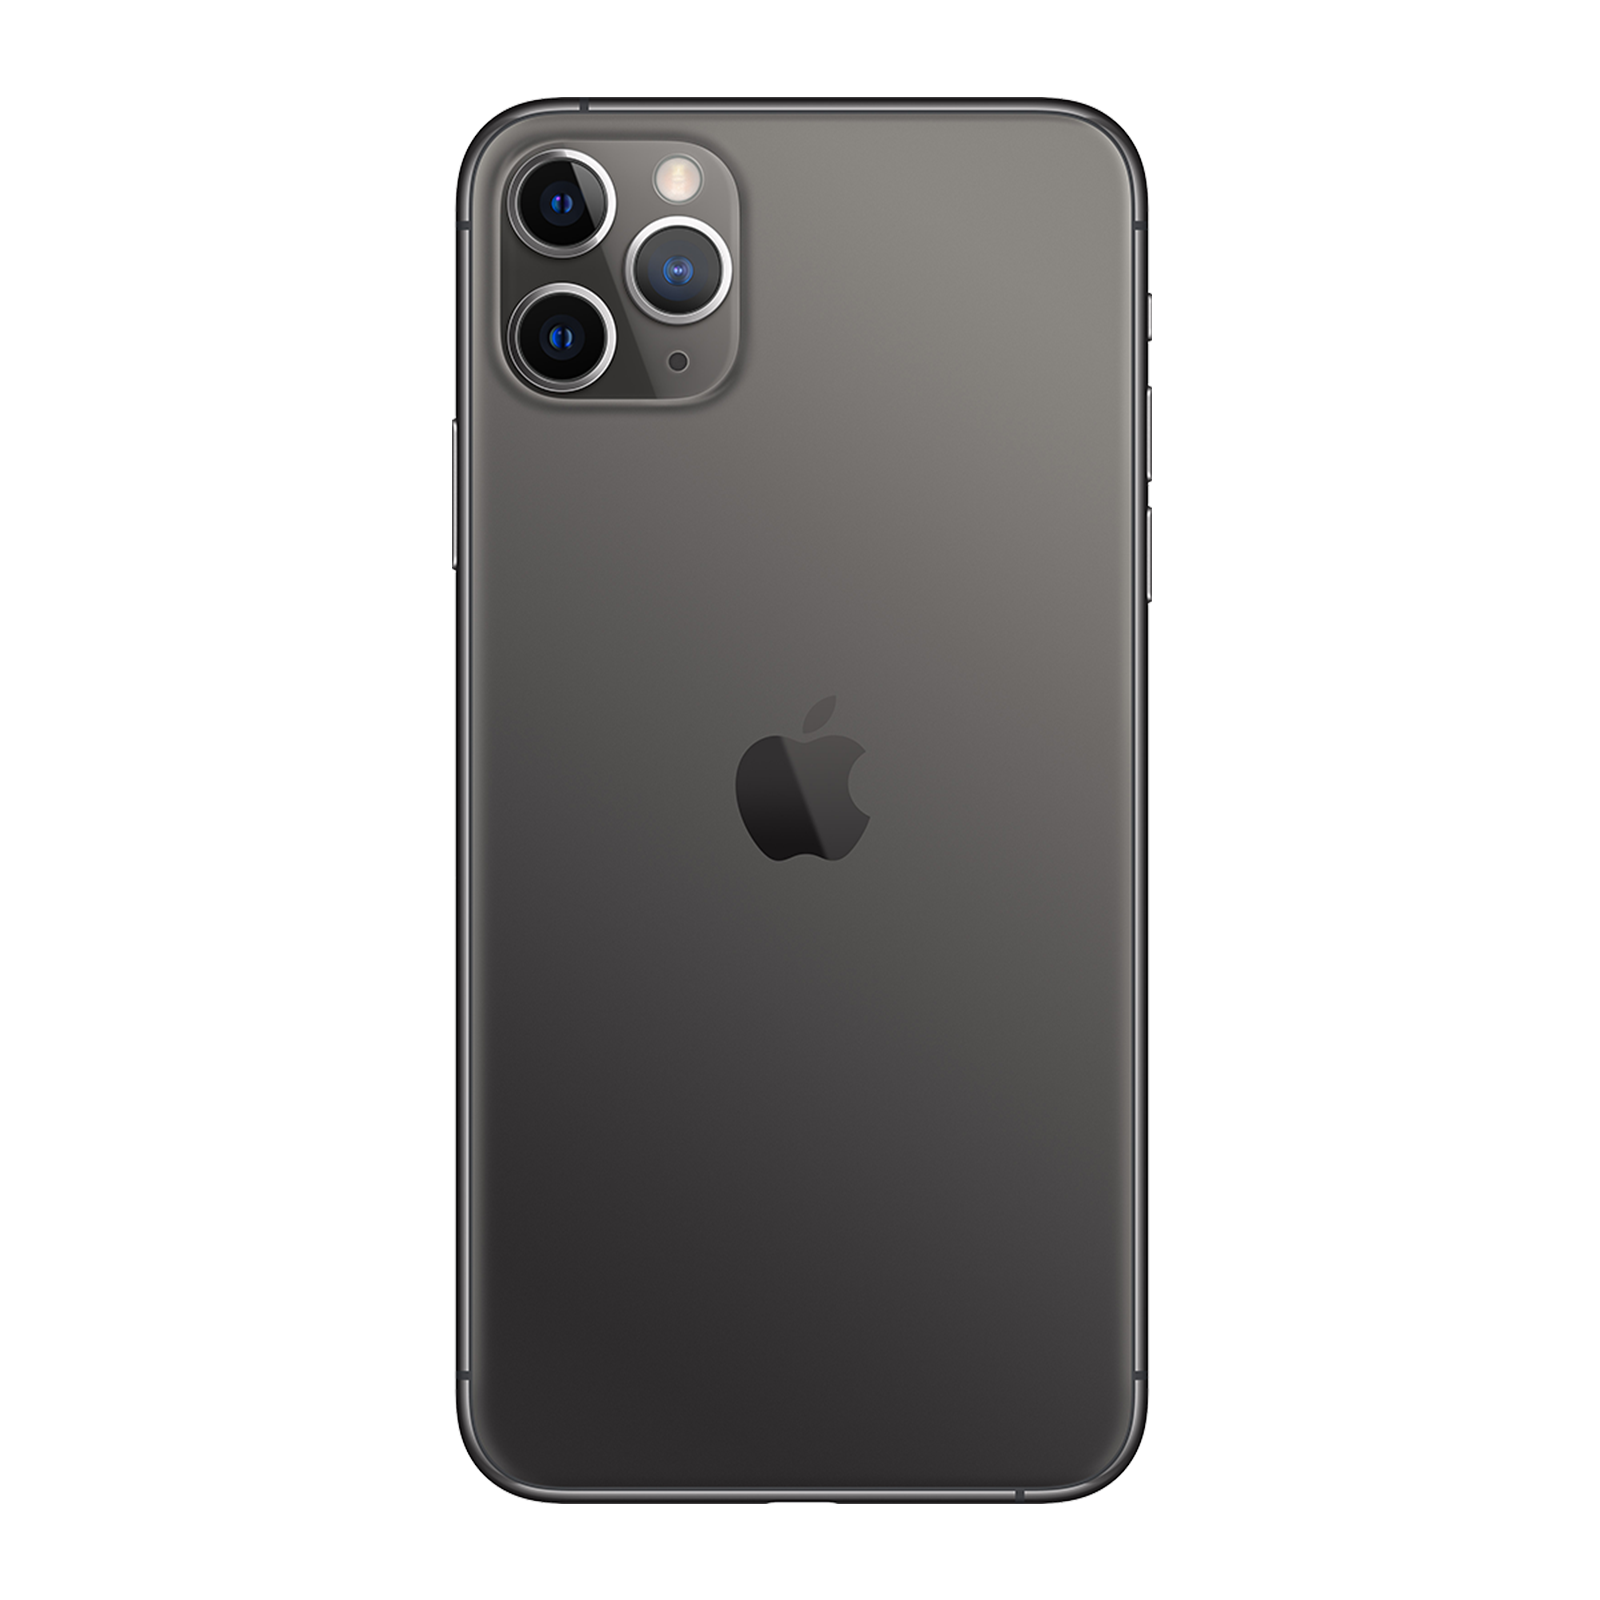 iPhone 11 Pro 64GB Space Grey Pristine - Unlocked